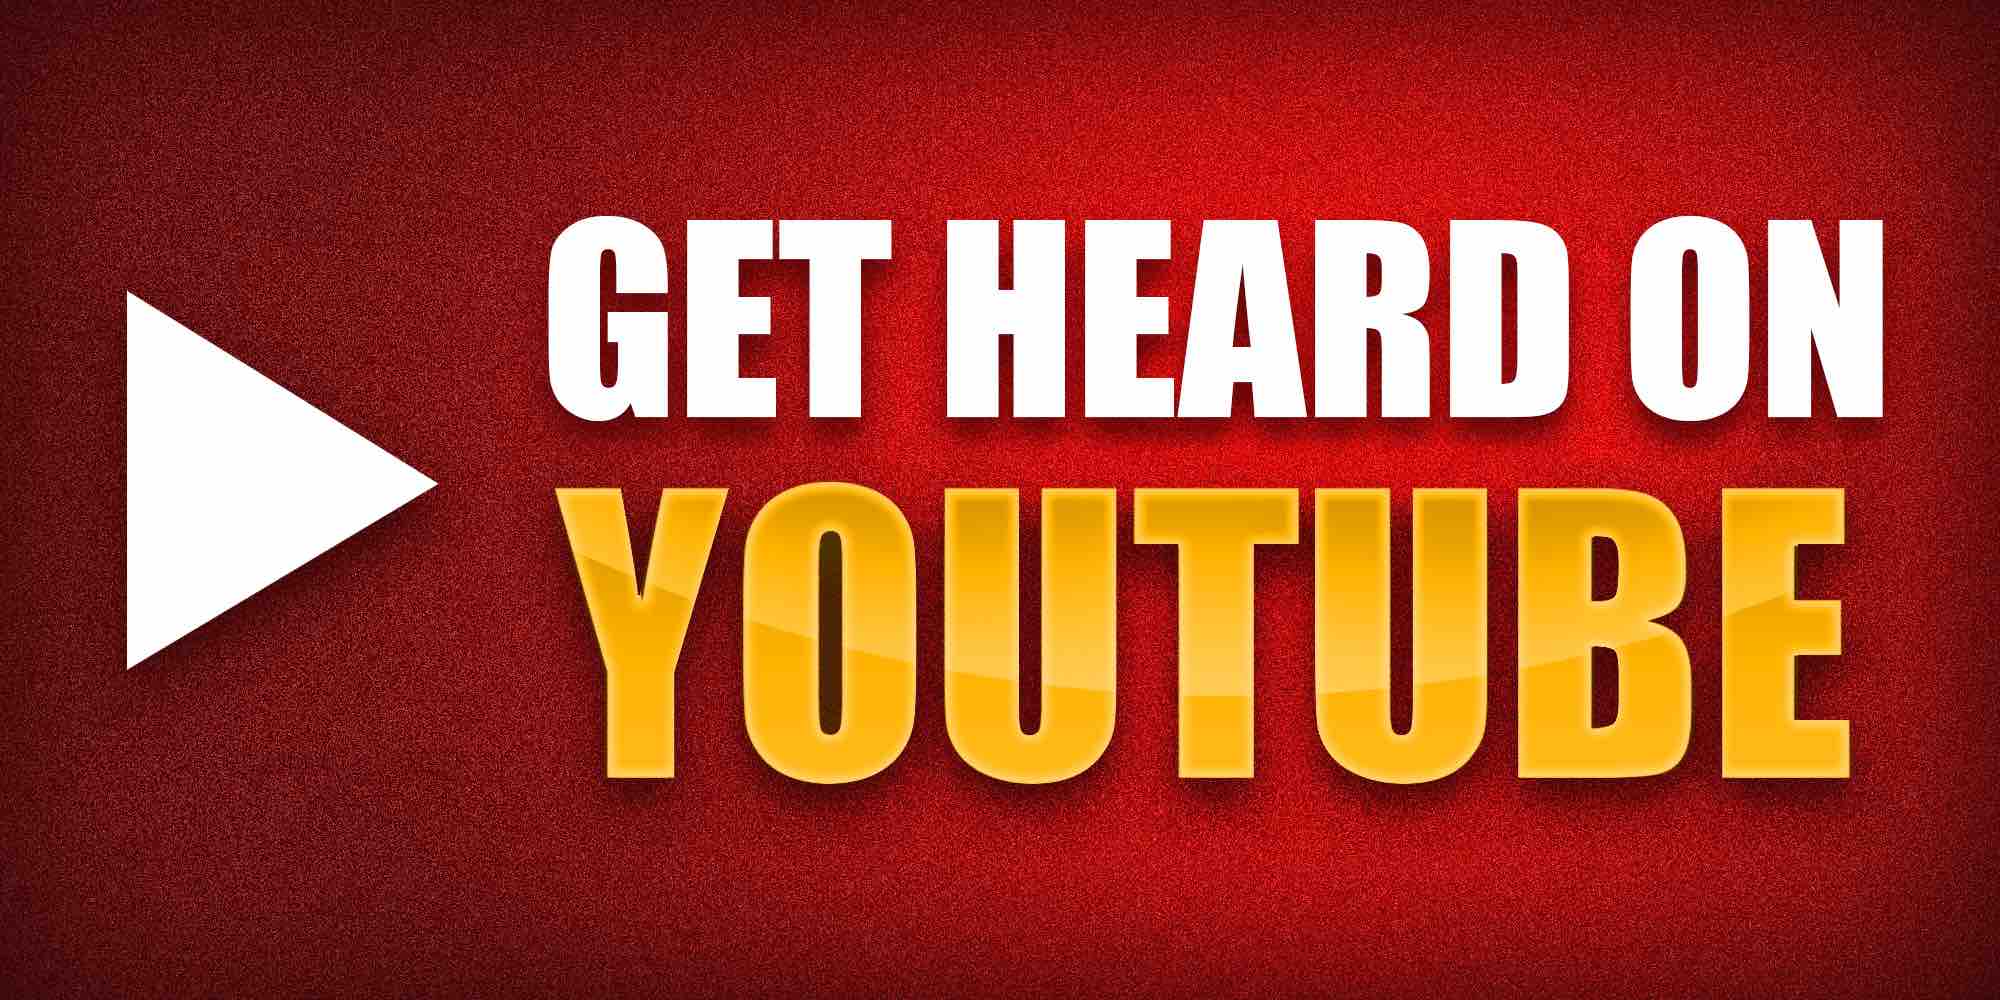 Get heard on Youtube